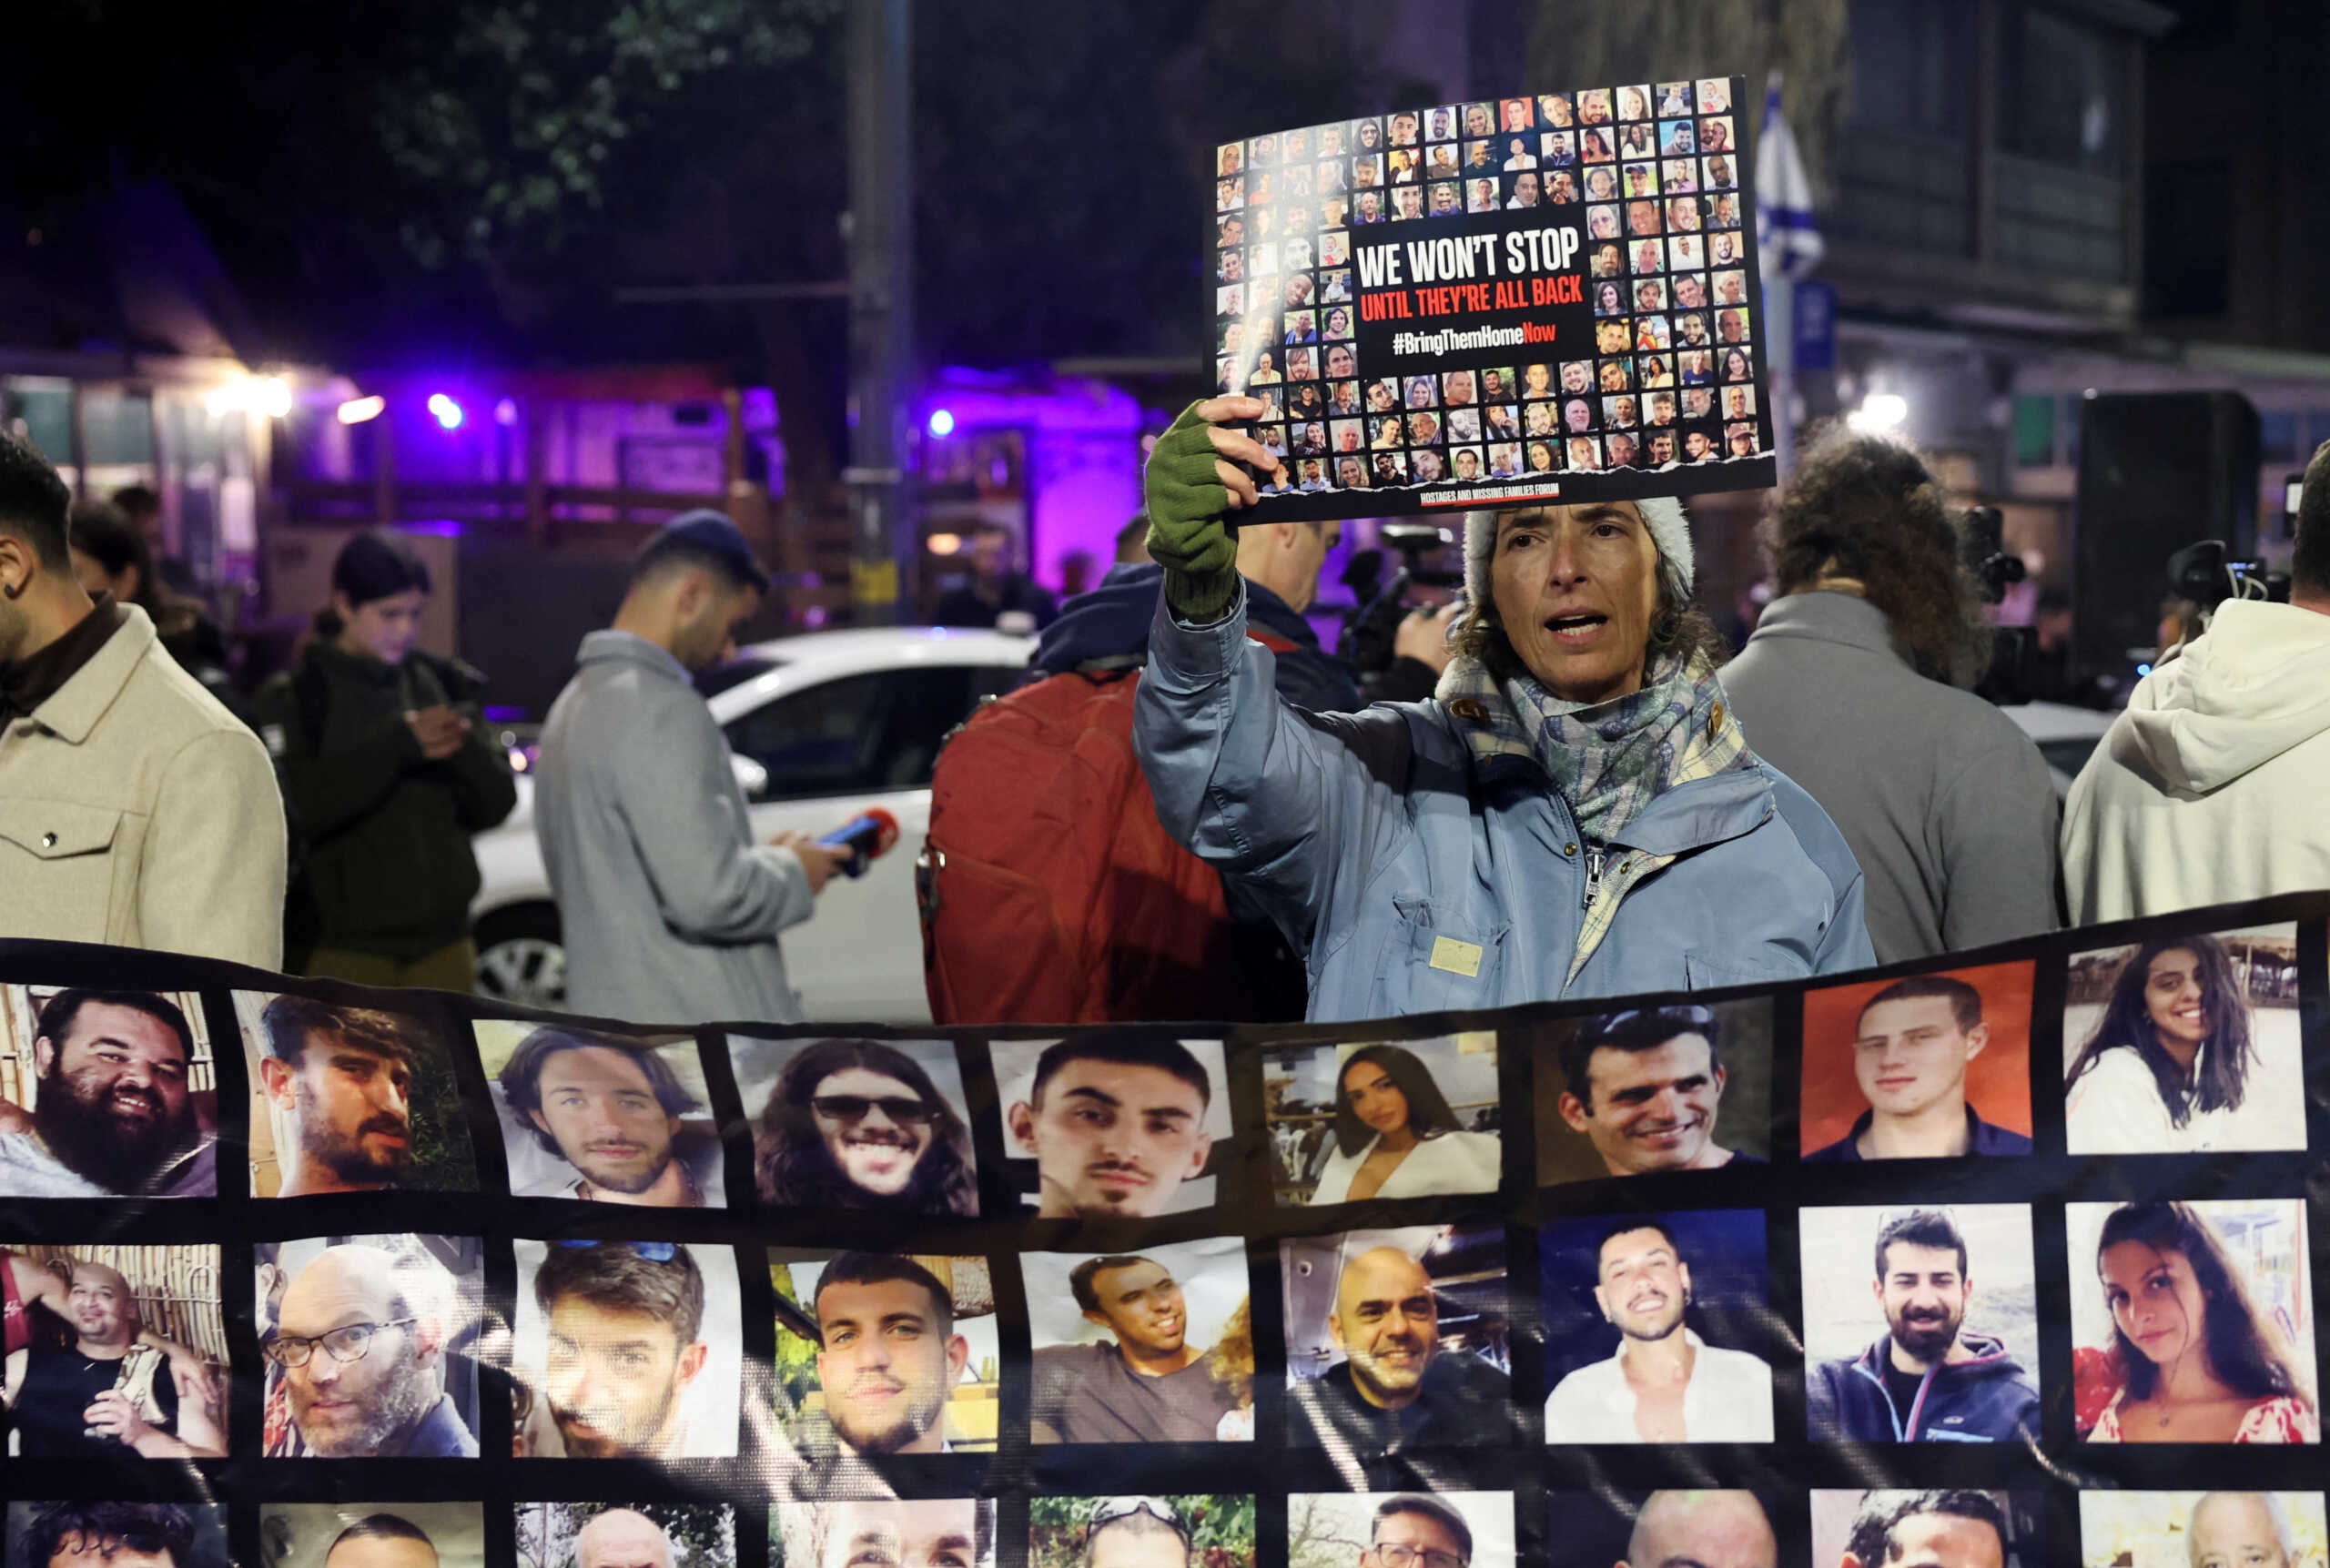 NYT: Ελπίδες για την απελευθέρωση ομήρων σε συνομιλίες στο Παρίσι